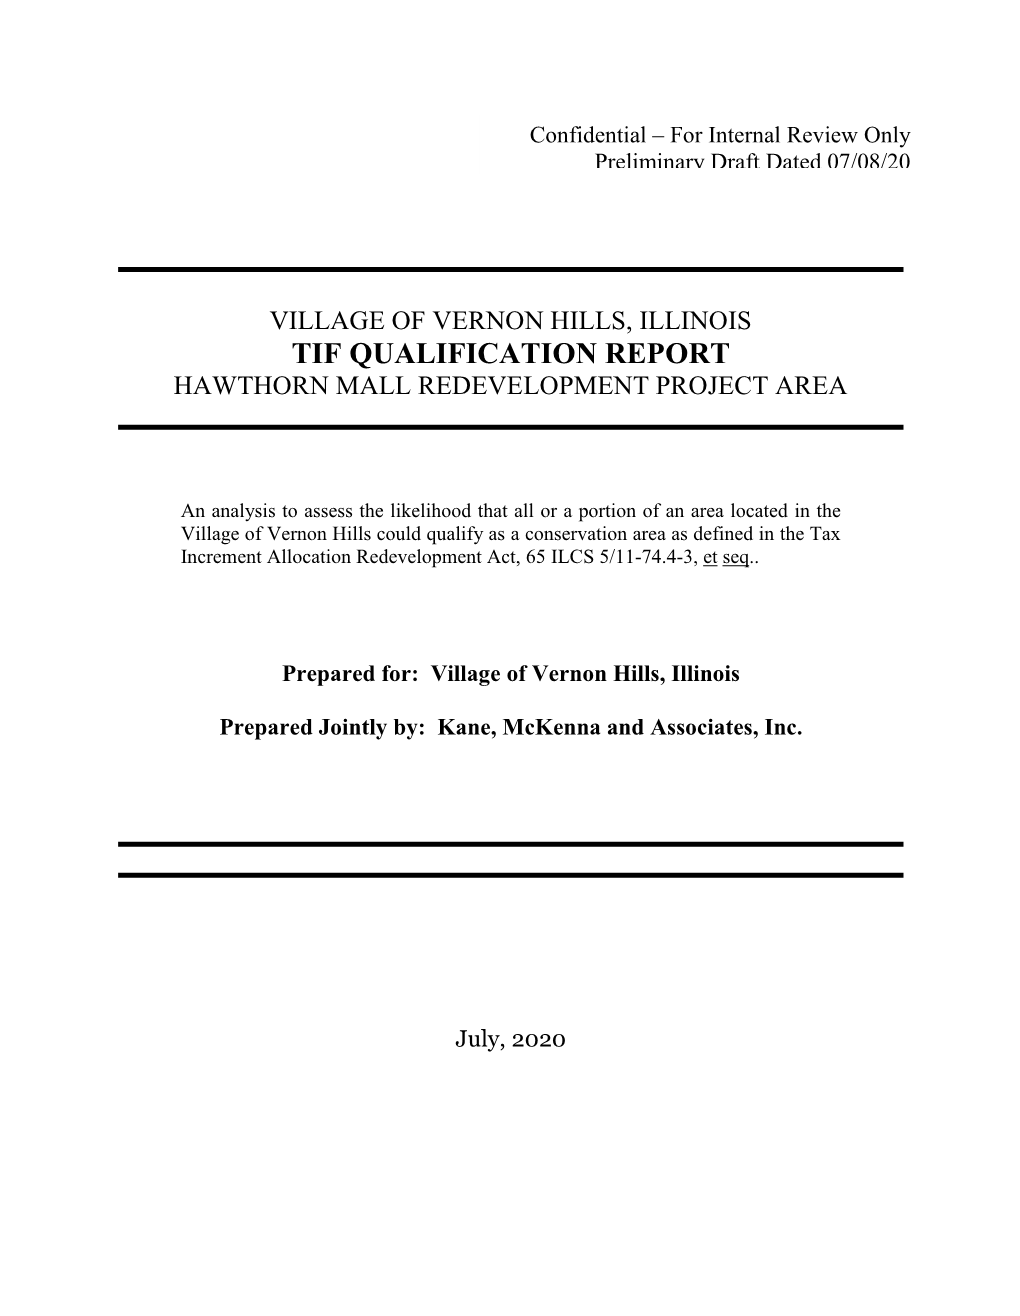 Hawthorne Mall TIF Qualification Report DRAFT 07.08.20